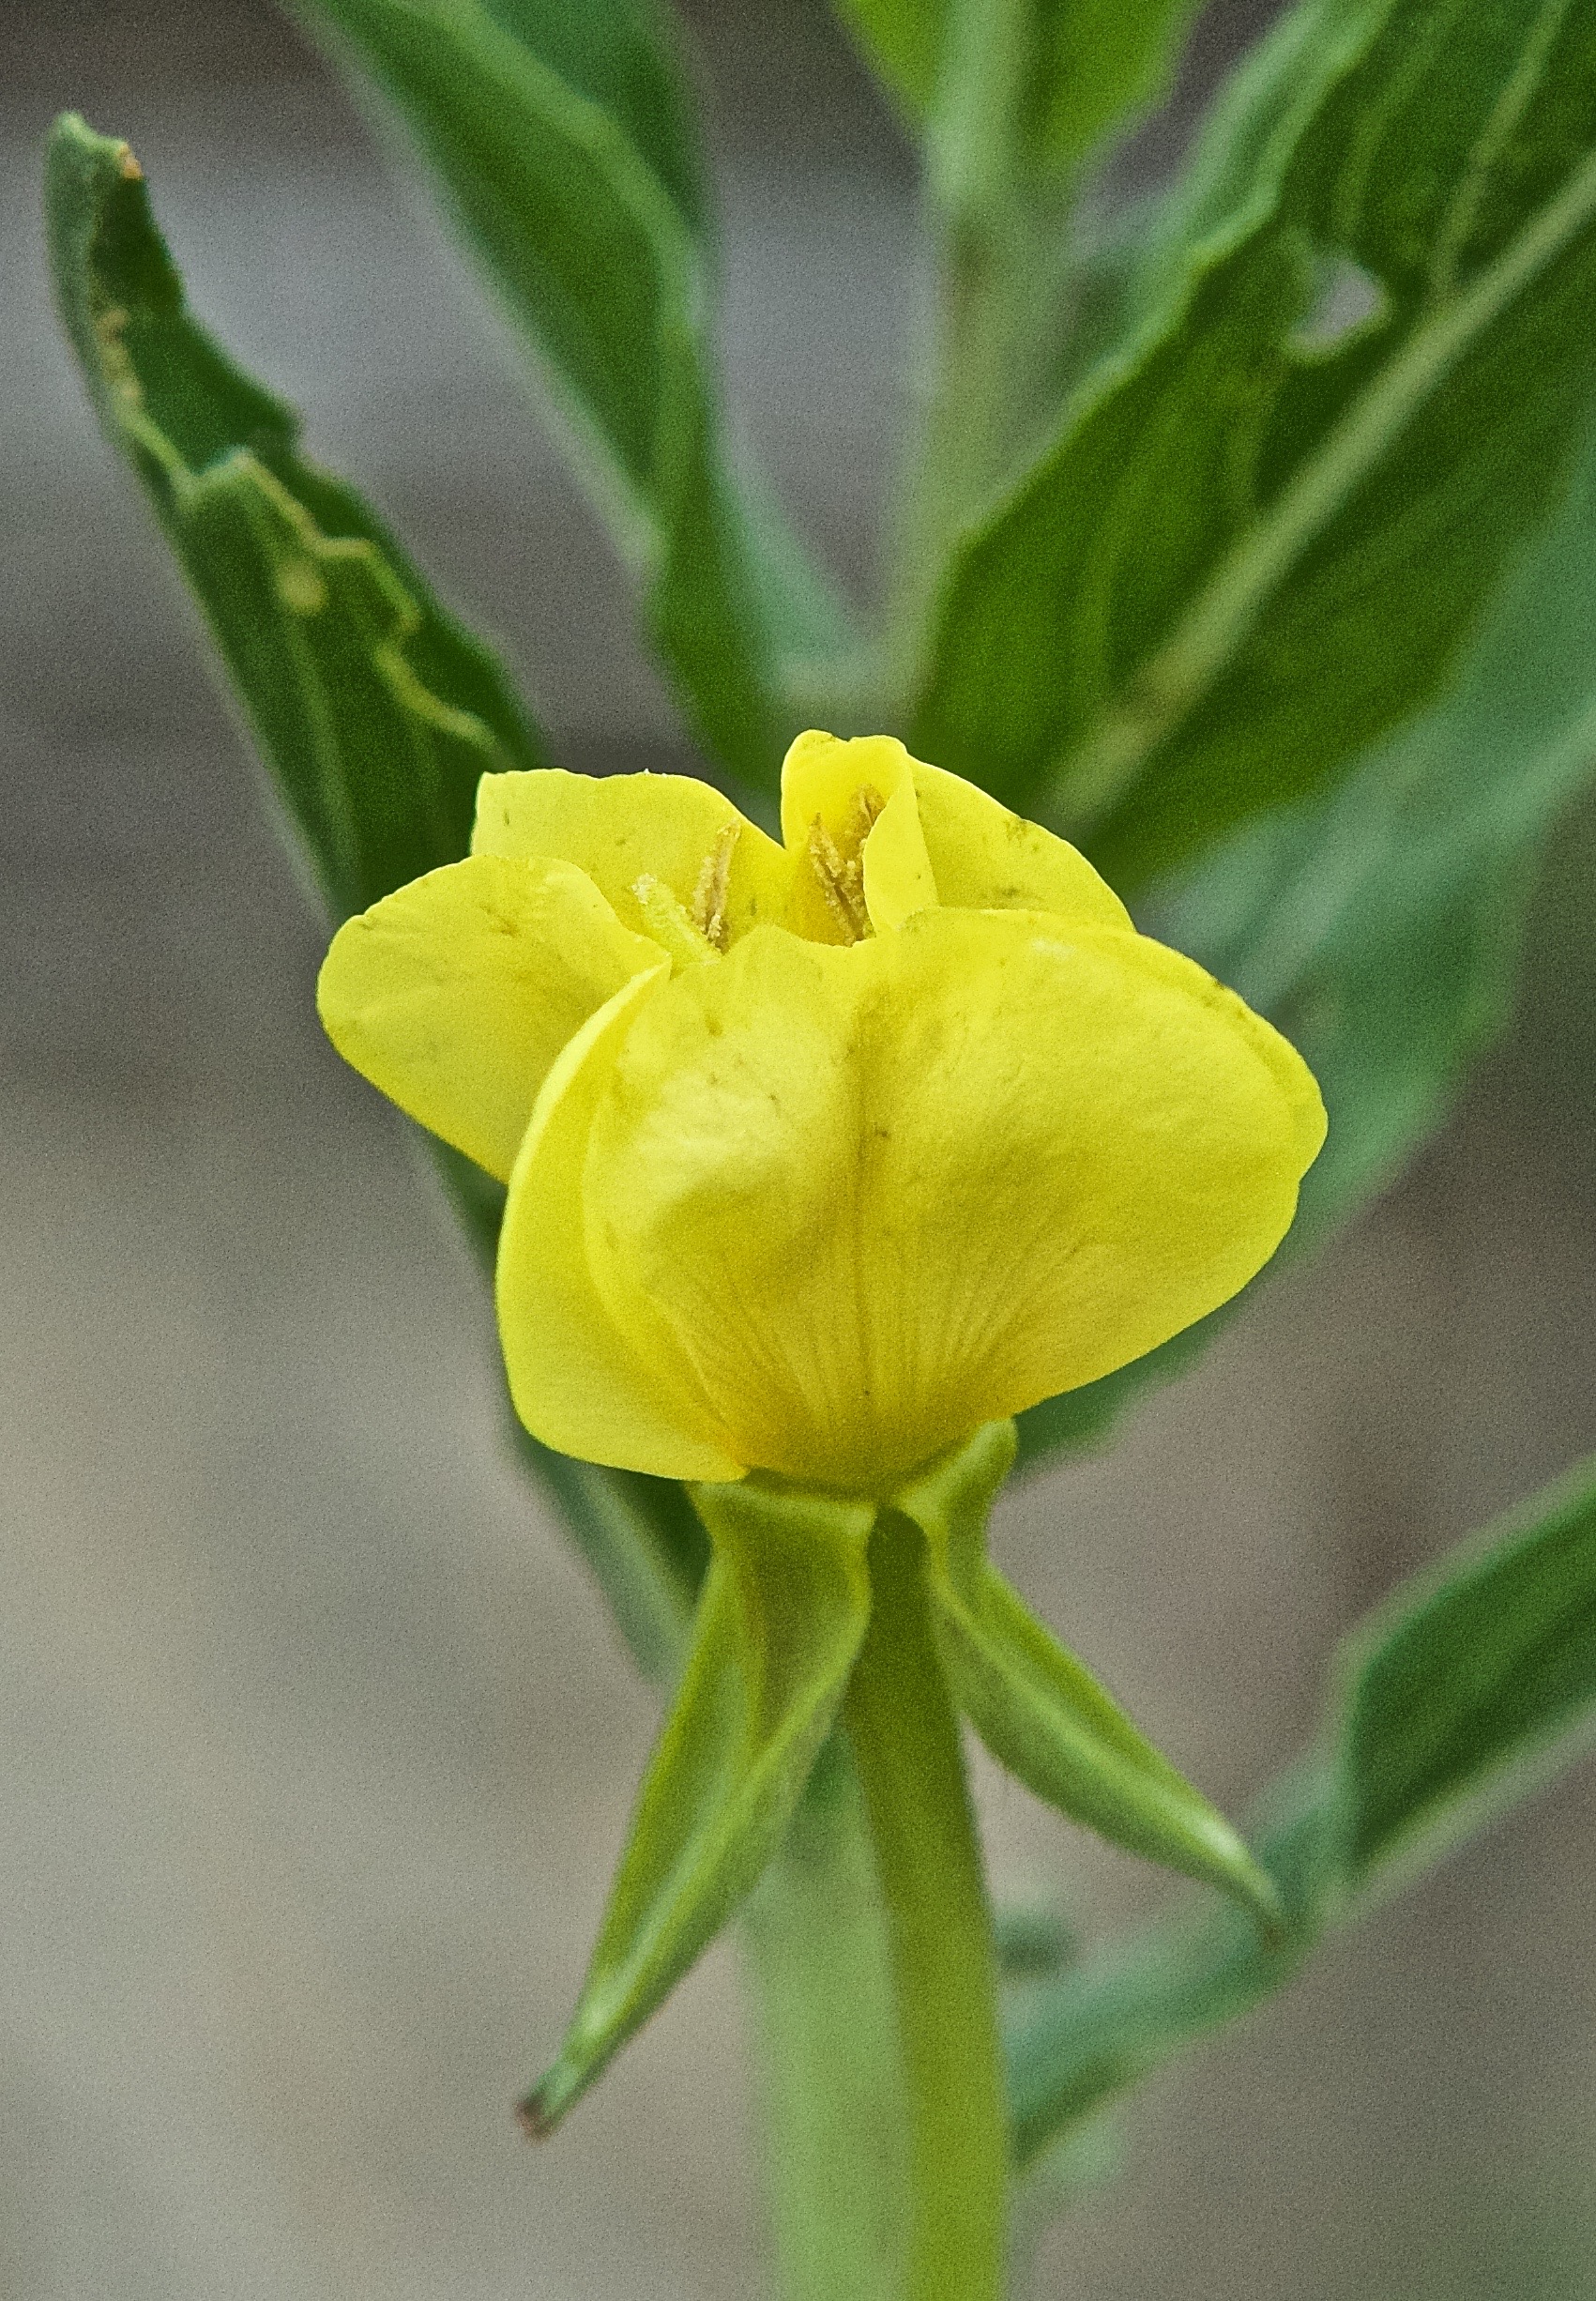 Common Evening Primrose (Oenothera villosa)